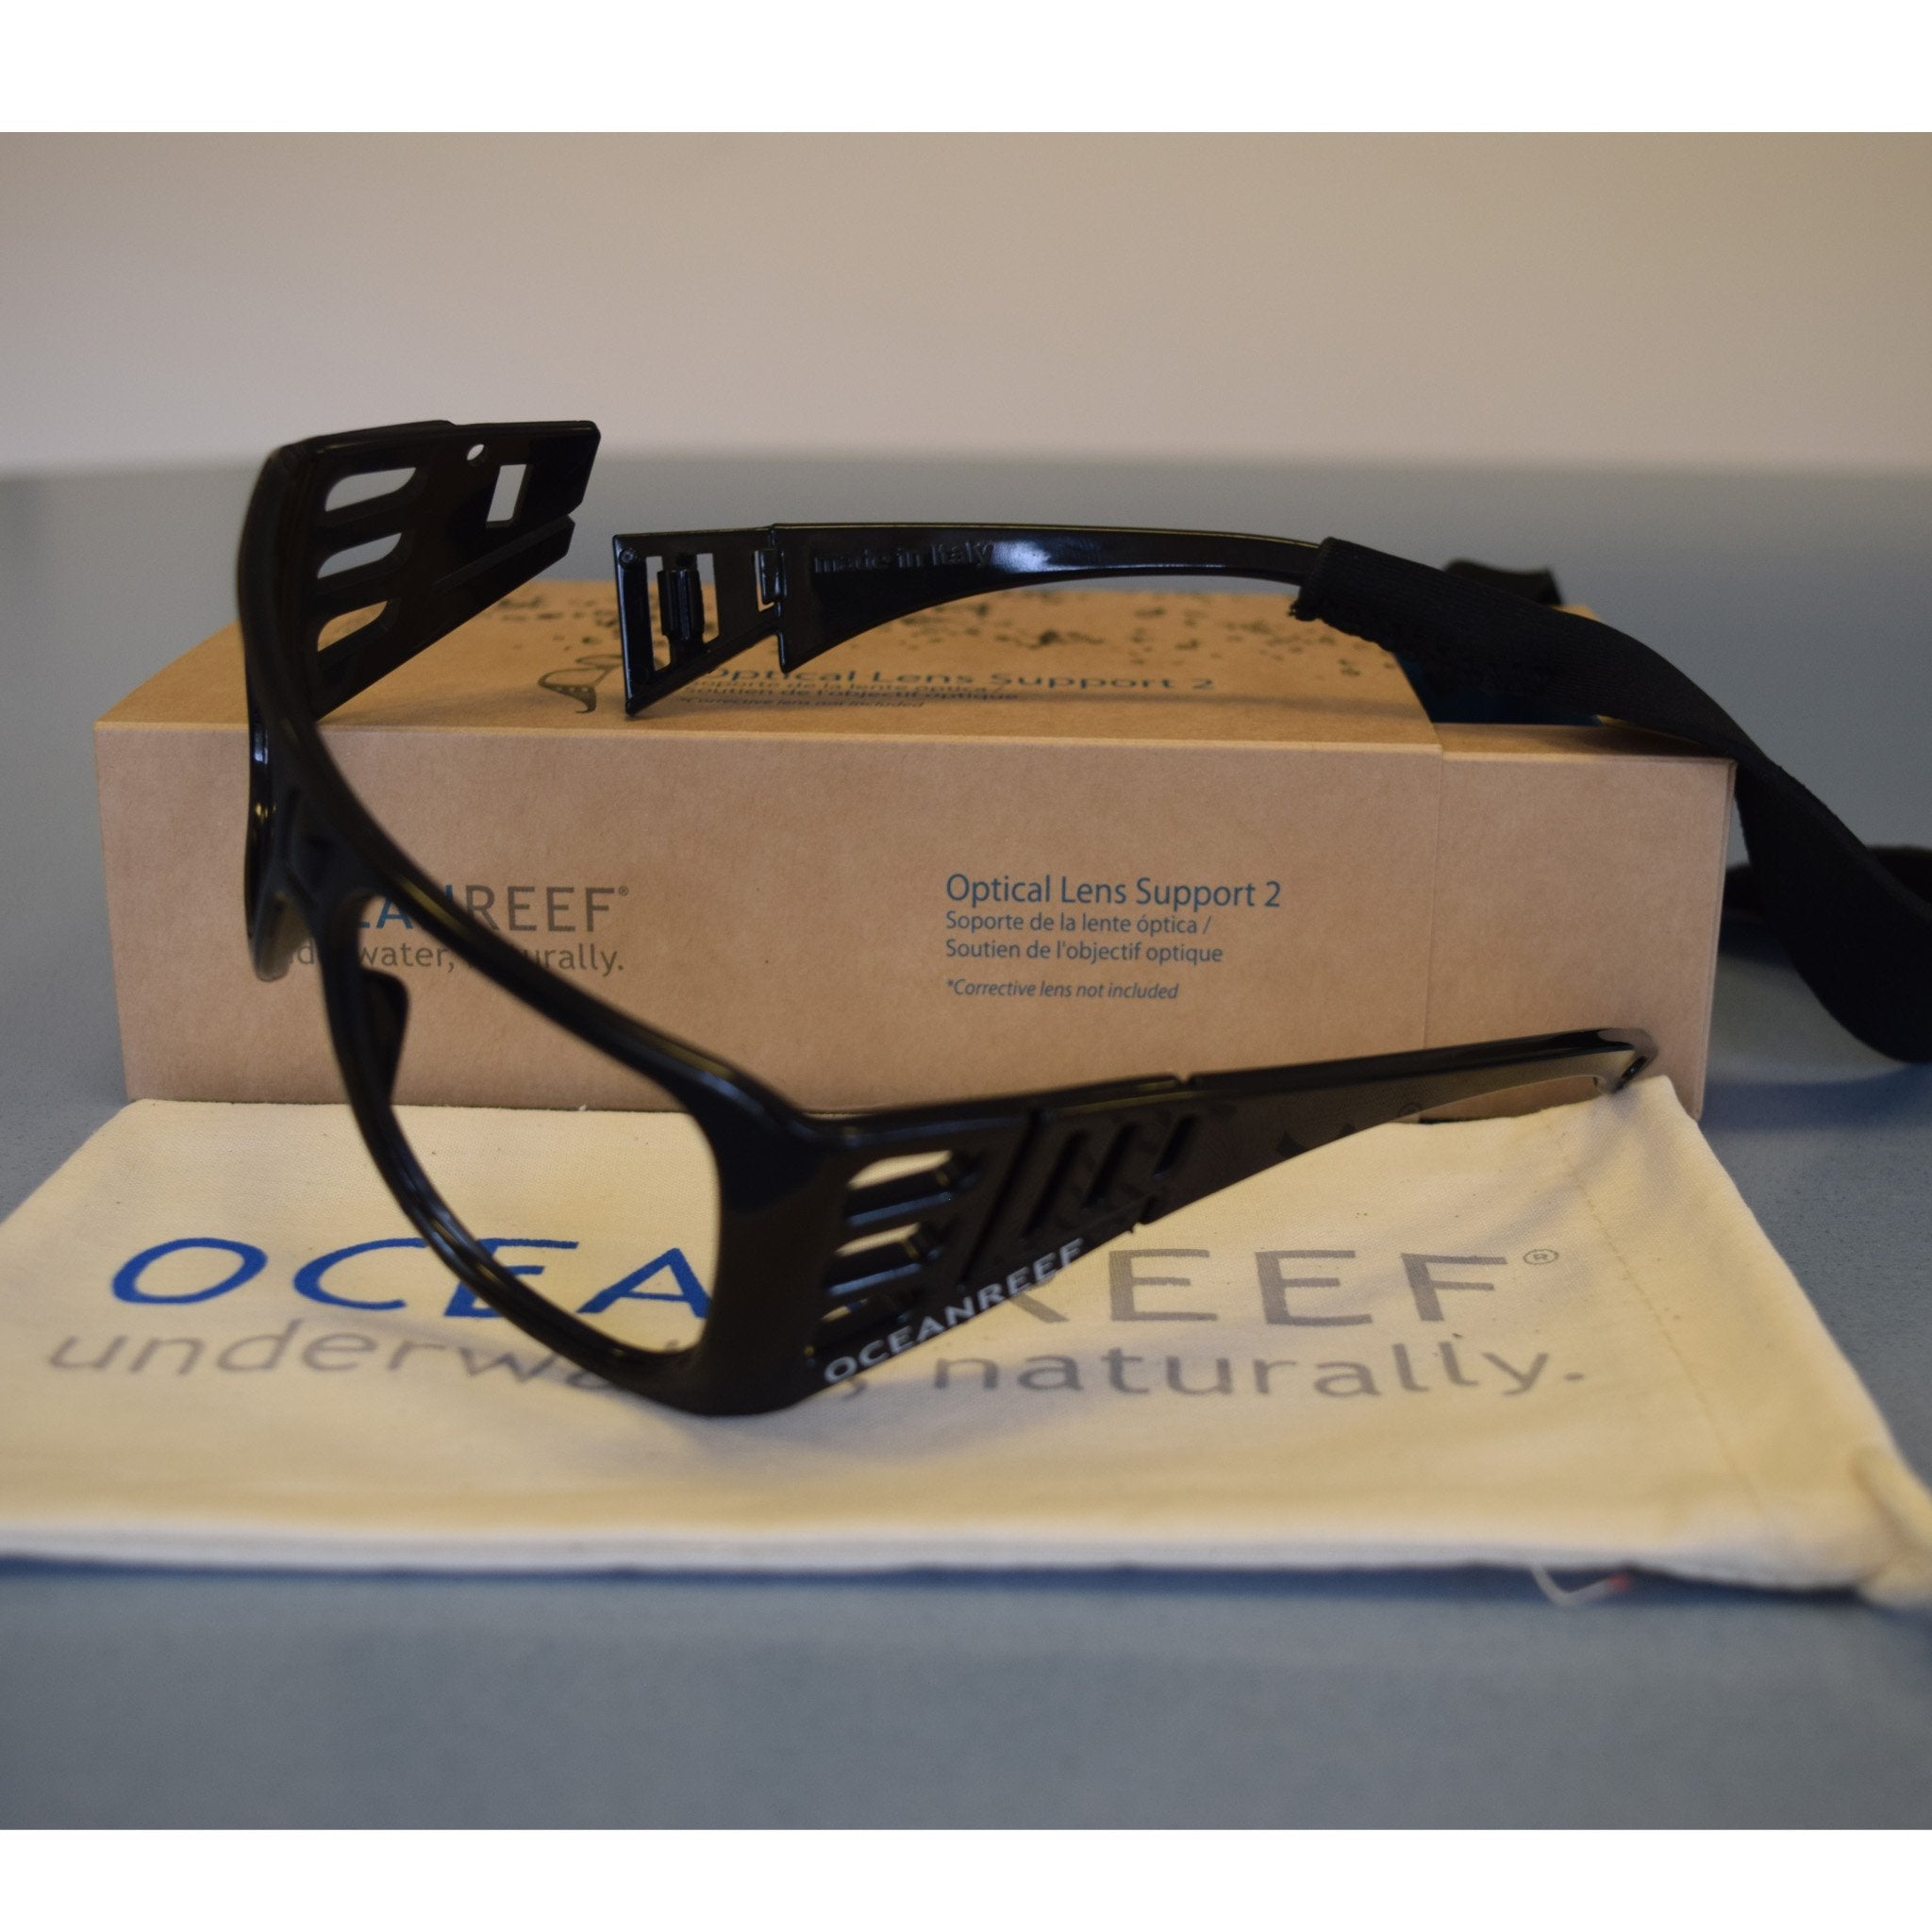 Optical Lens Support 2.0-Snorkeling Masks-wetsuit, diver, sharkskin, snorkeling gear, watersports equipment, diving fins, snorkeling mask, ocean reef, Garmin G1